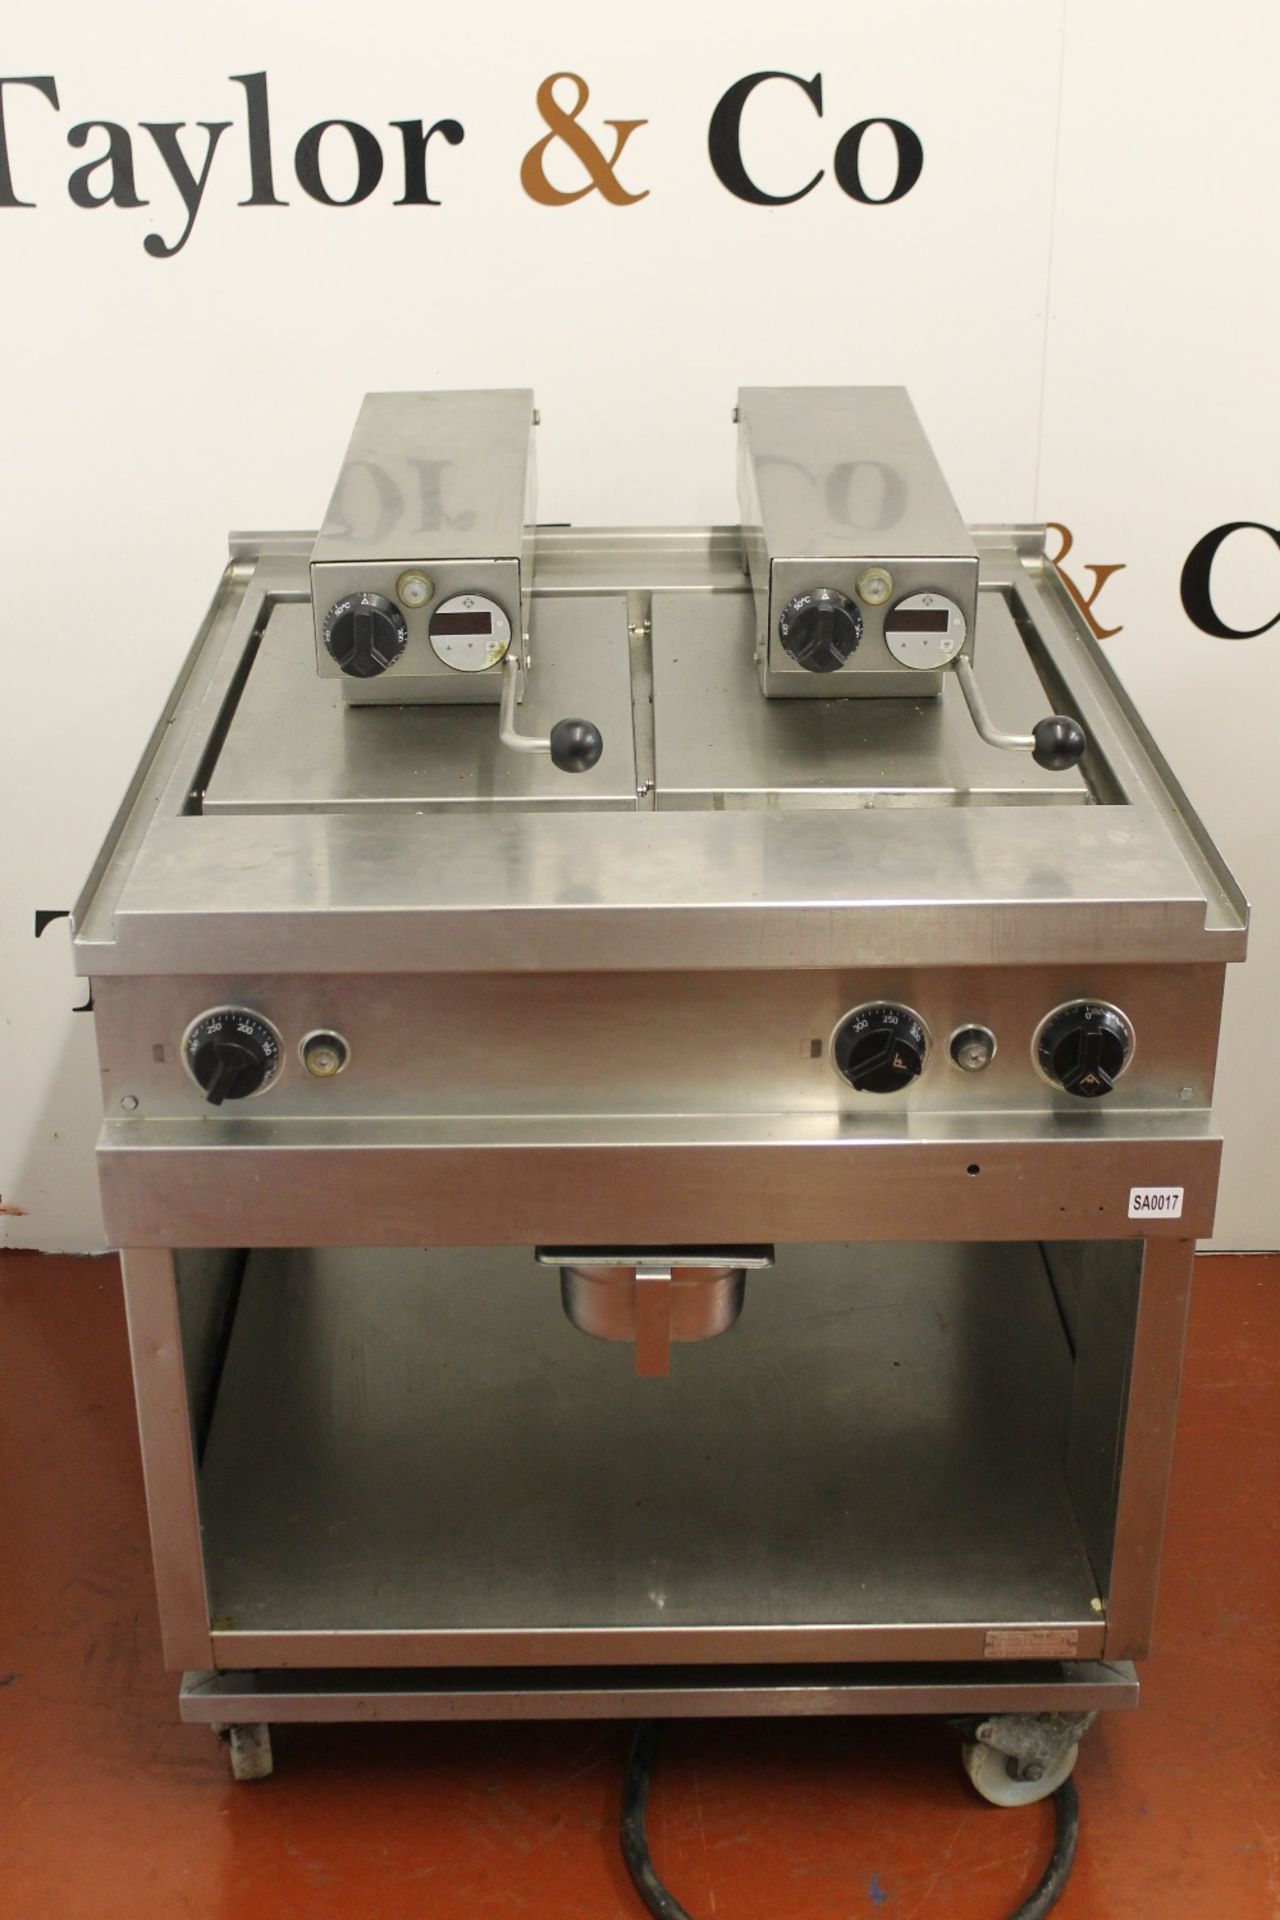 Large Griddle / Hot Plate with 2 x Pressure Plates Model 005601 – 1 support leg missing -NO VAT - Image 2 of 2